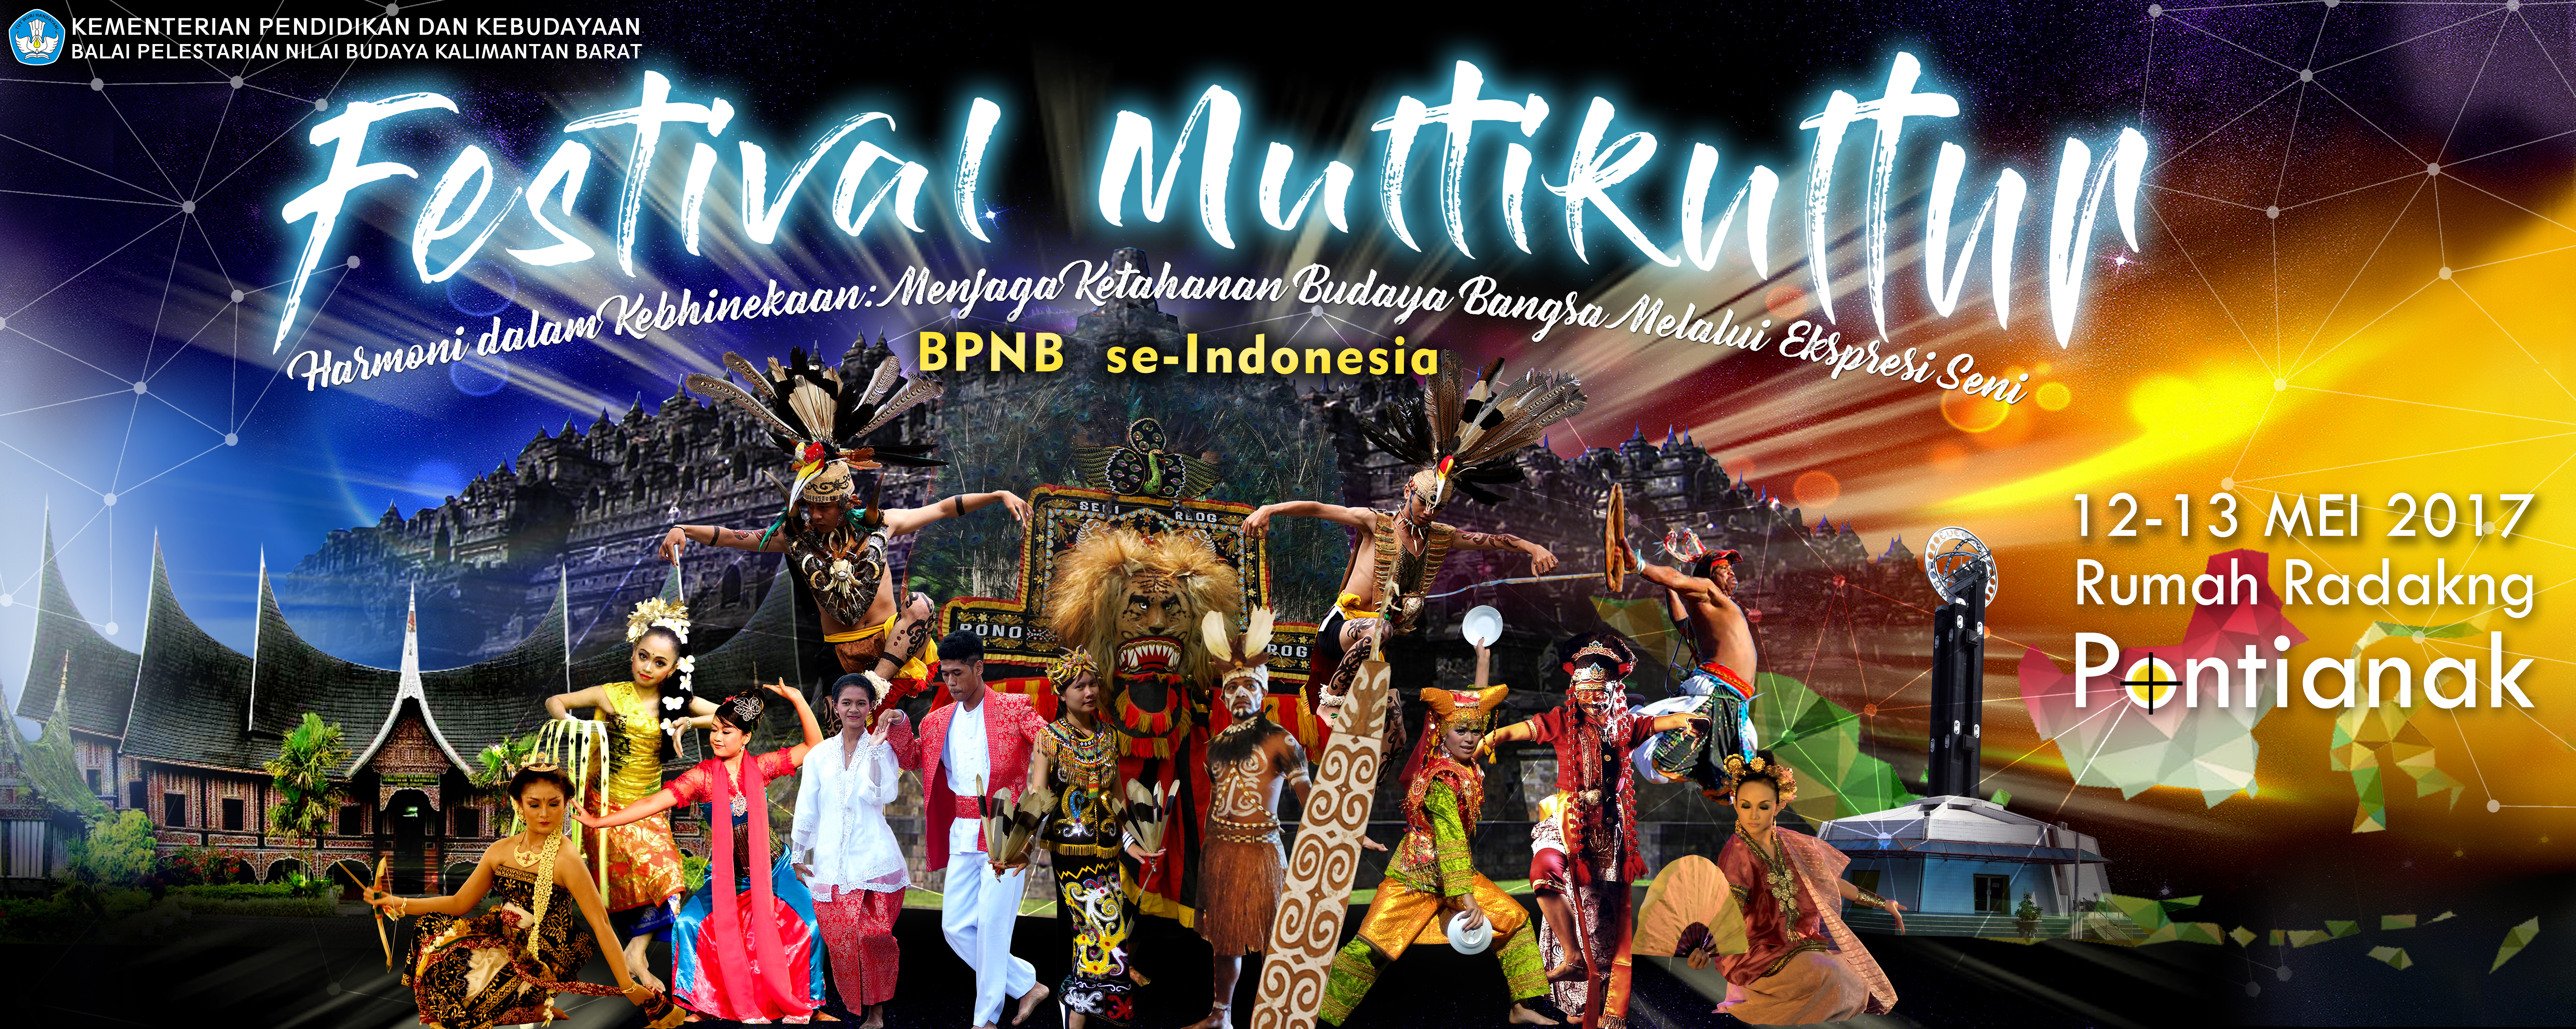 Festival Multikultur Tari Tradisional Dan Kreasi Nusantara (Bpnb Se-Indonesia) - Ditjen Kebudayaan